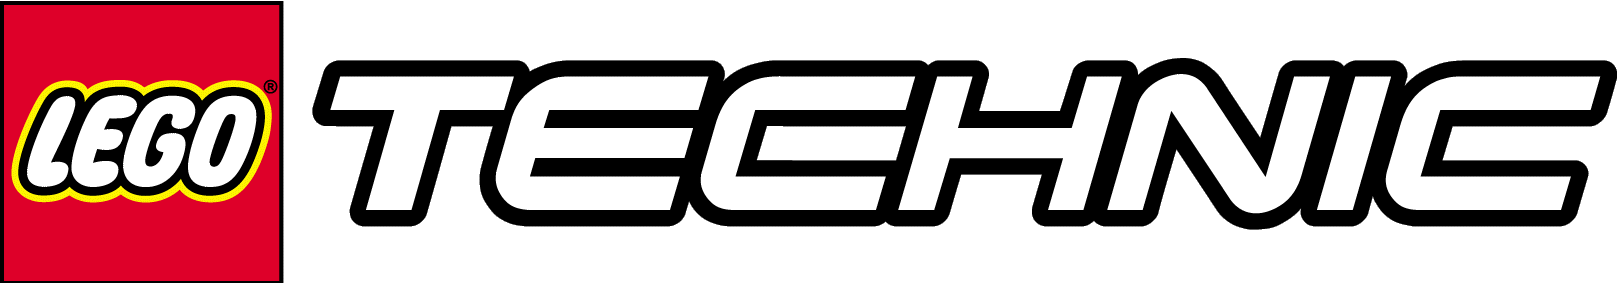 Lego_Technic_logo.png